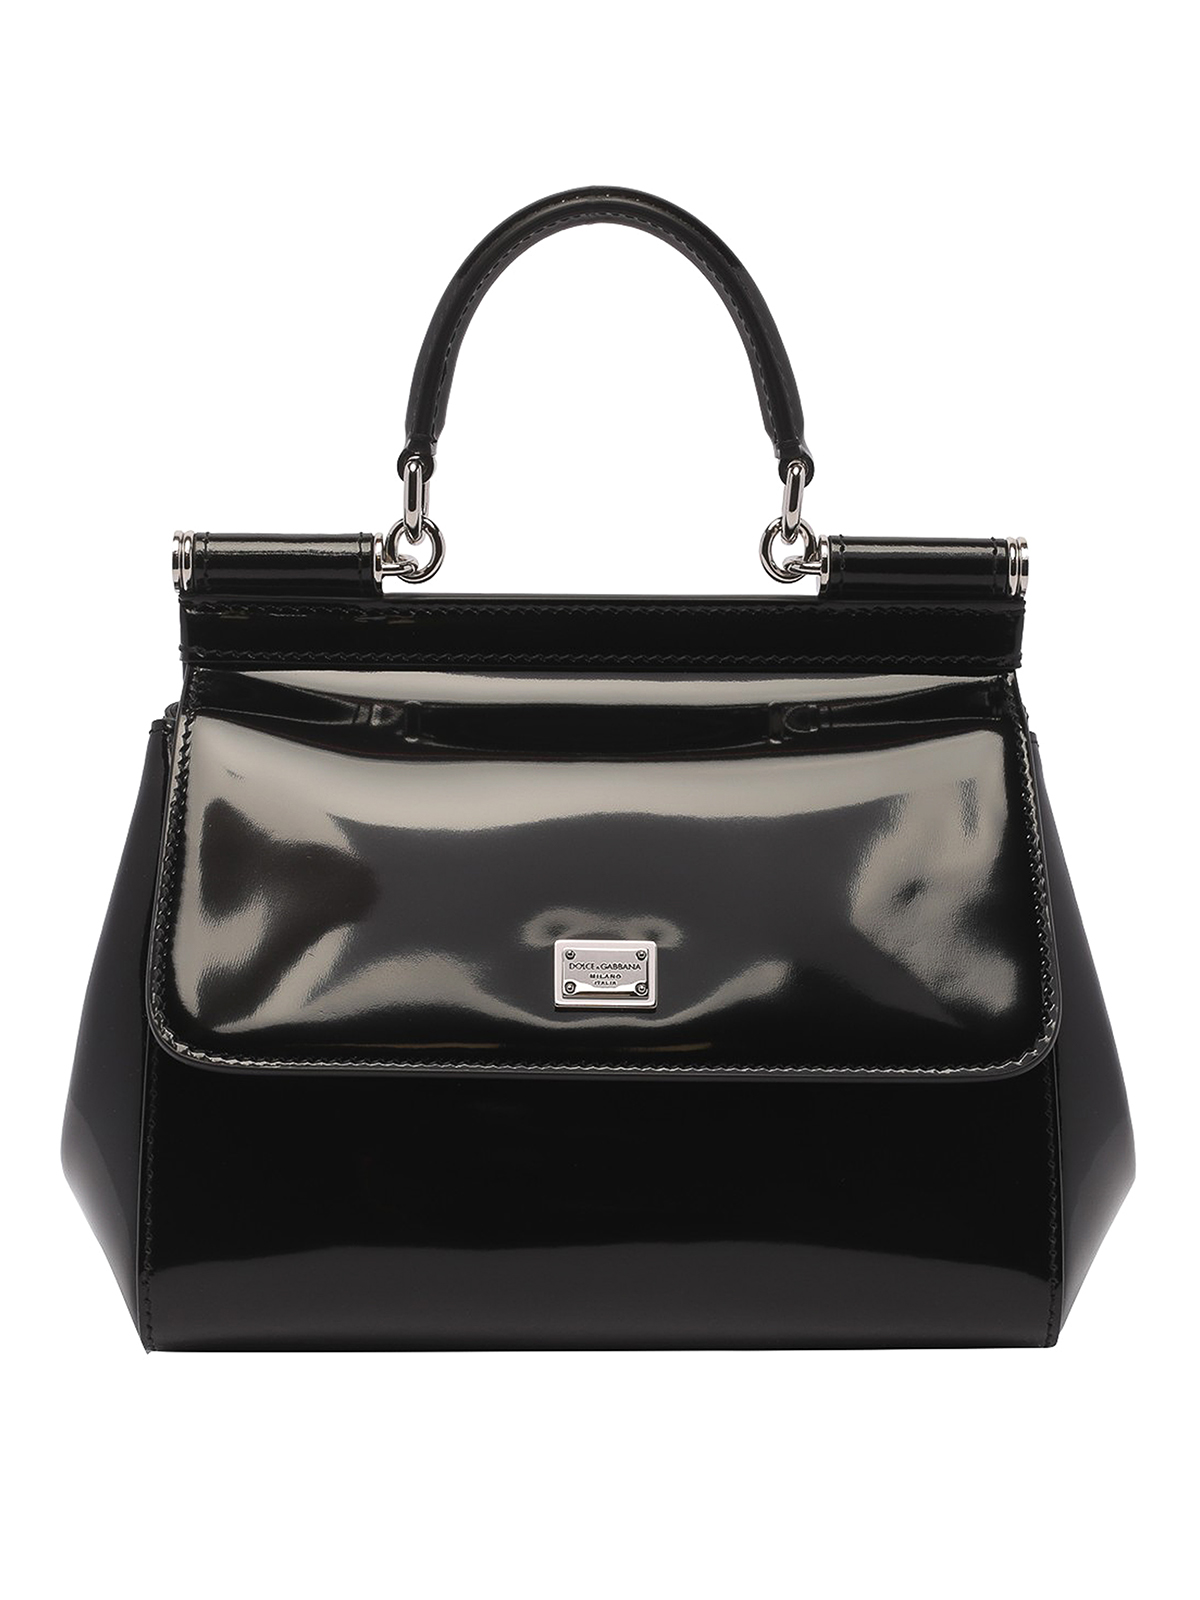 Dolce & Gabbana Patent Leather Sicily Bag In Black